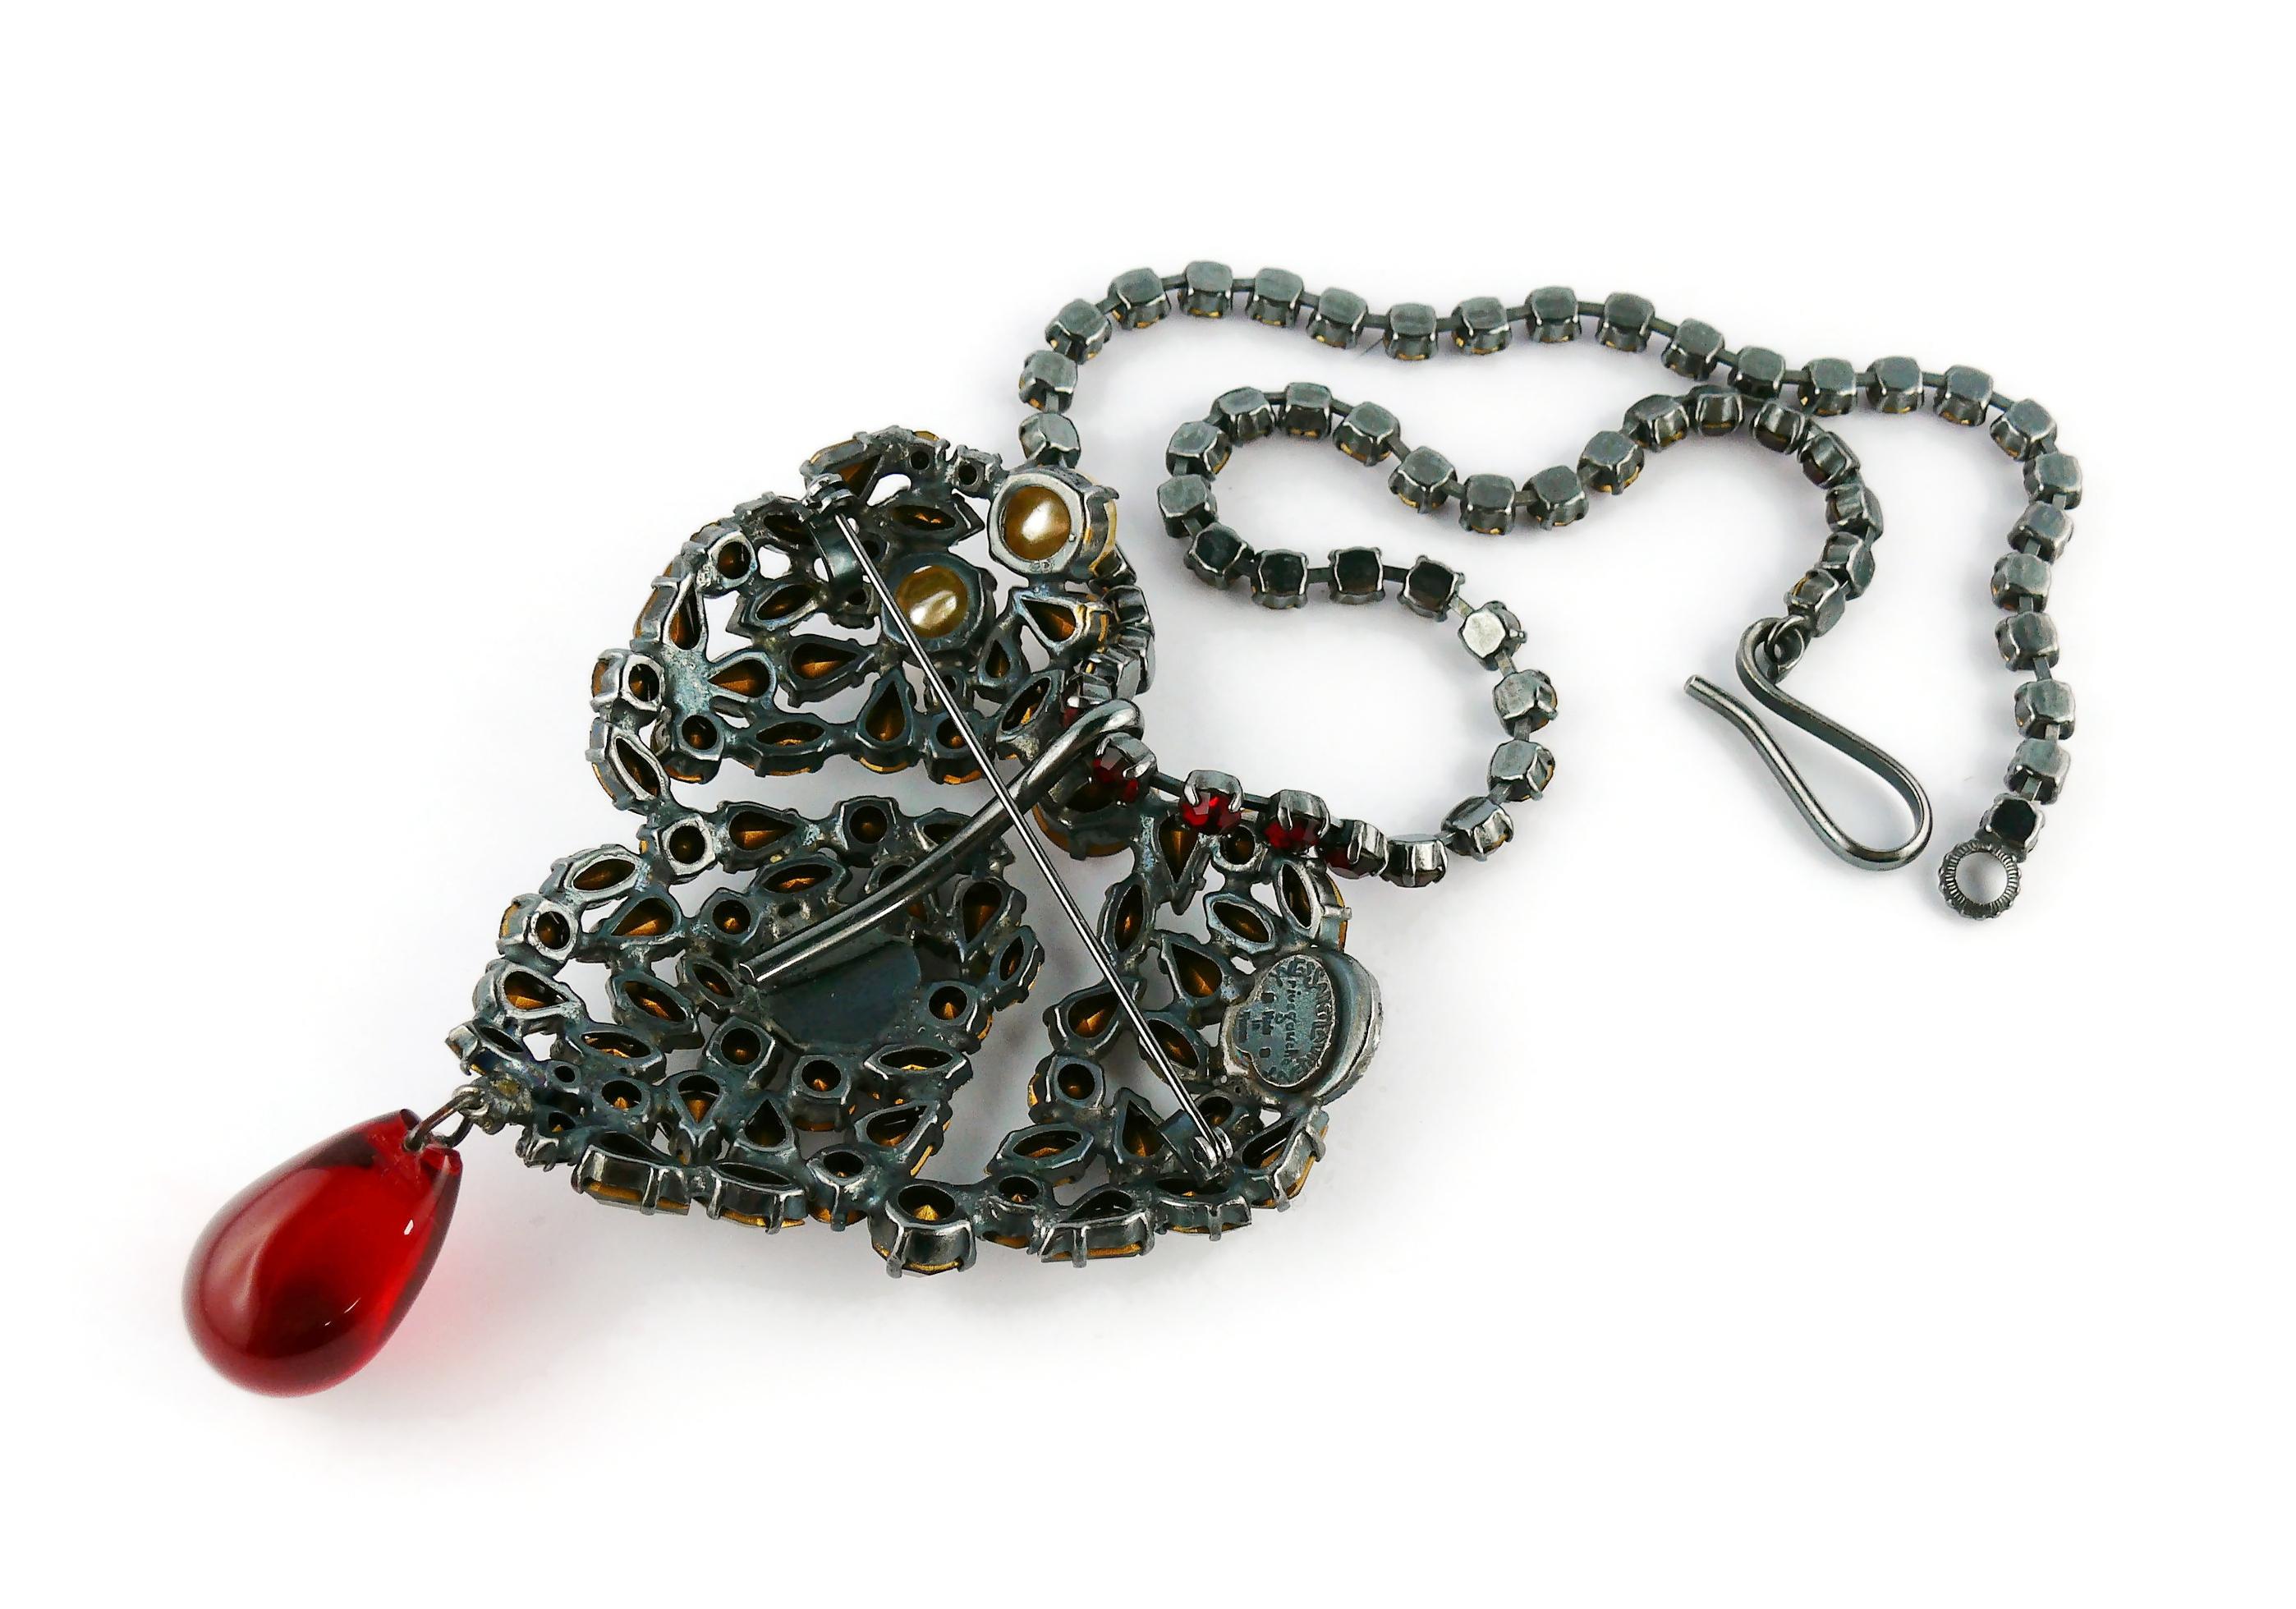 Yves Saint Laurent Vintage Massive Iconic Bejeweled Heart Brooch Necklace 10